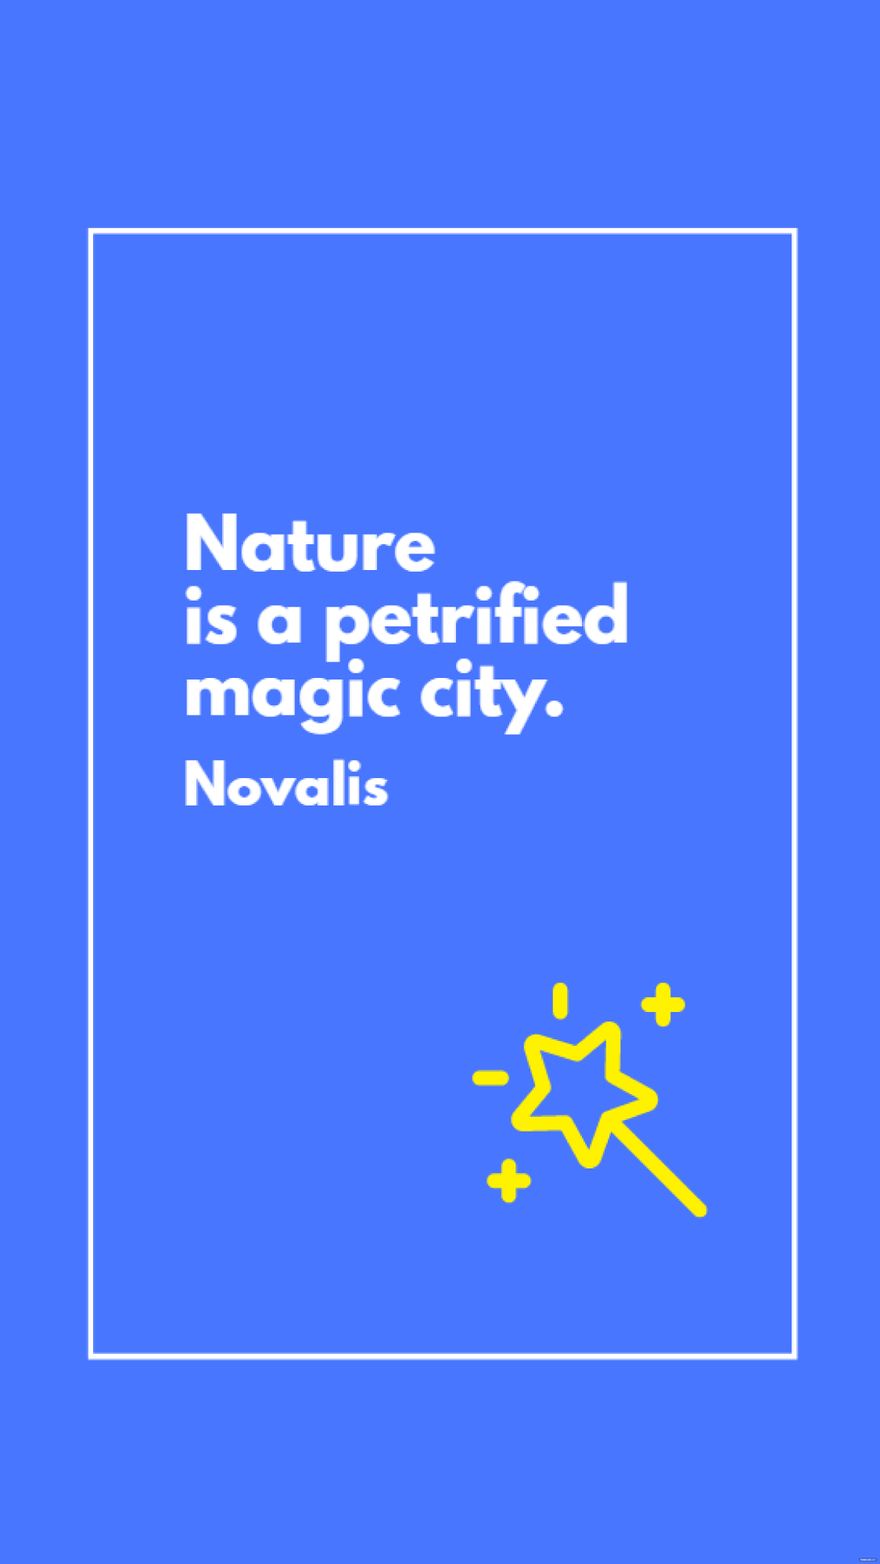 Novalis - Nature is a petrified magic city. in JPG